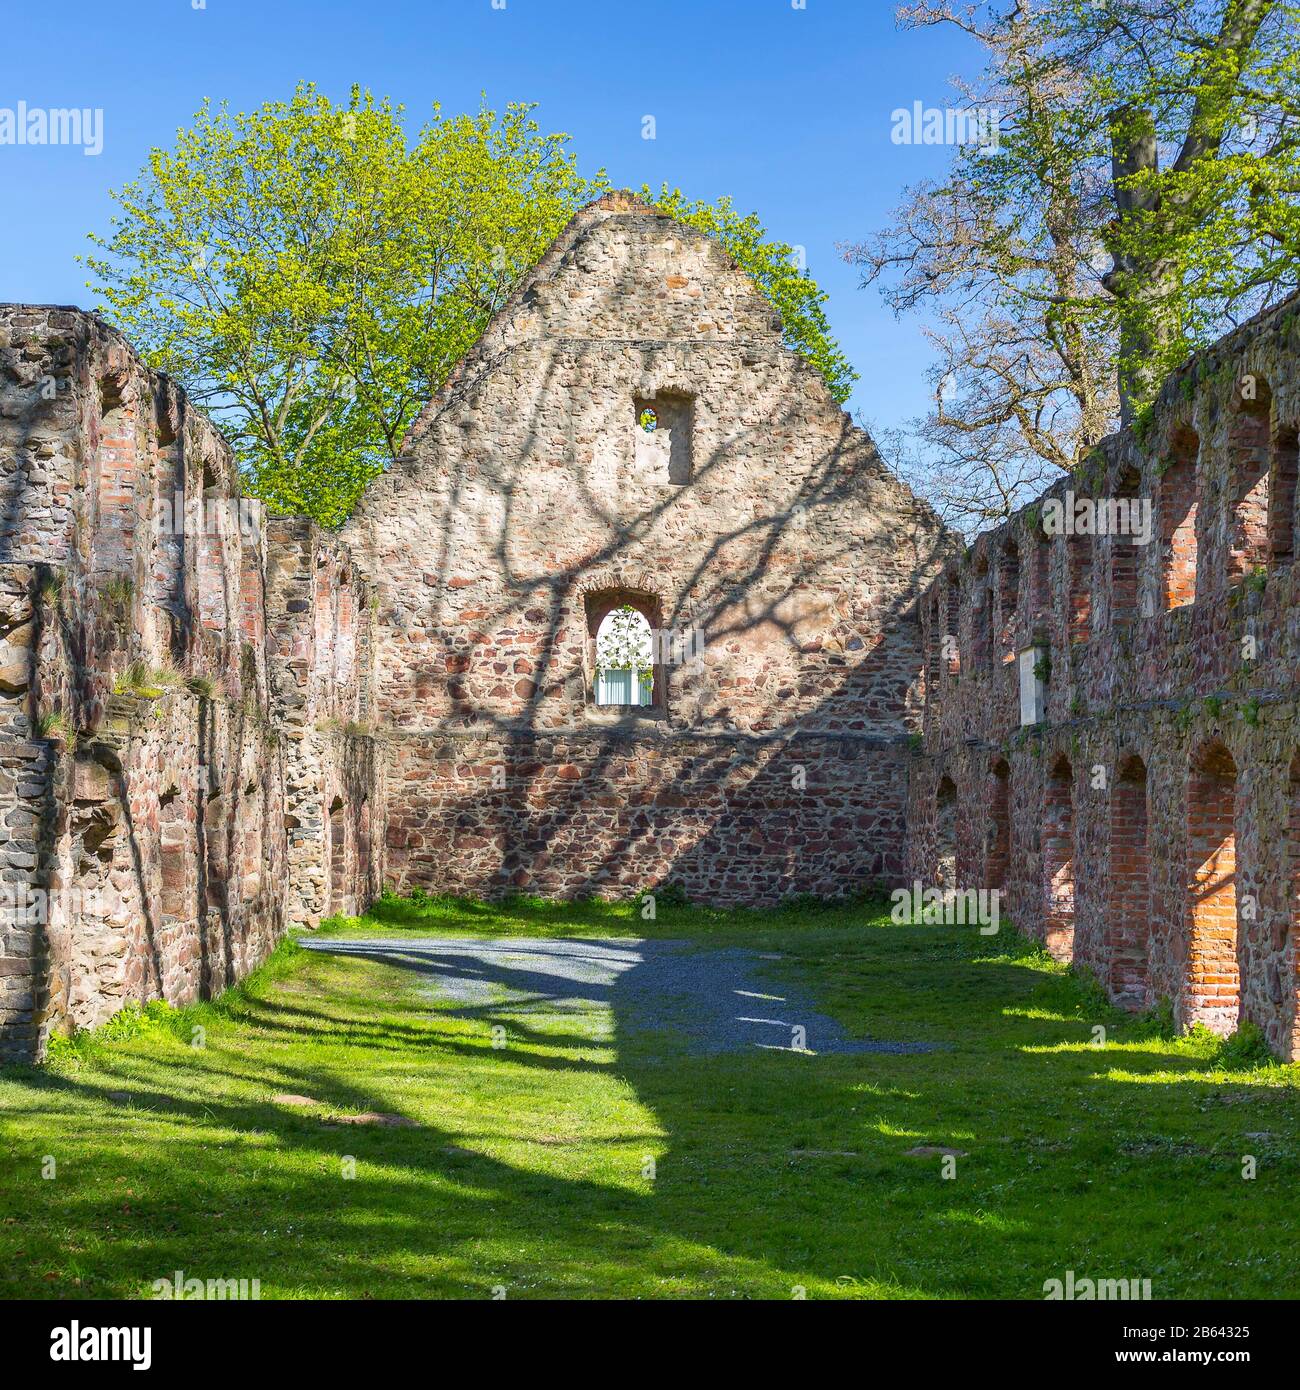 Ruin of the monastery Nimbschen, Grimma, Saxony, Germany Stock Photo